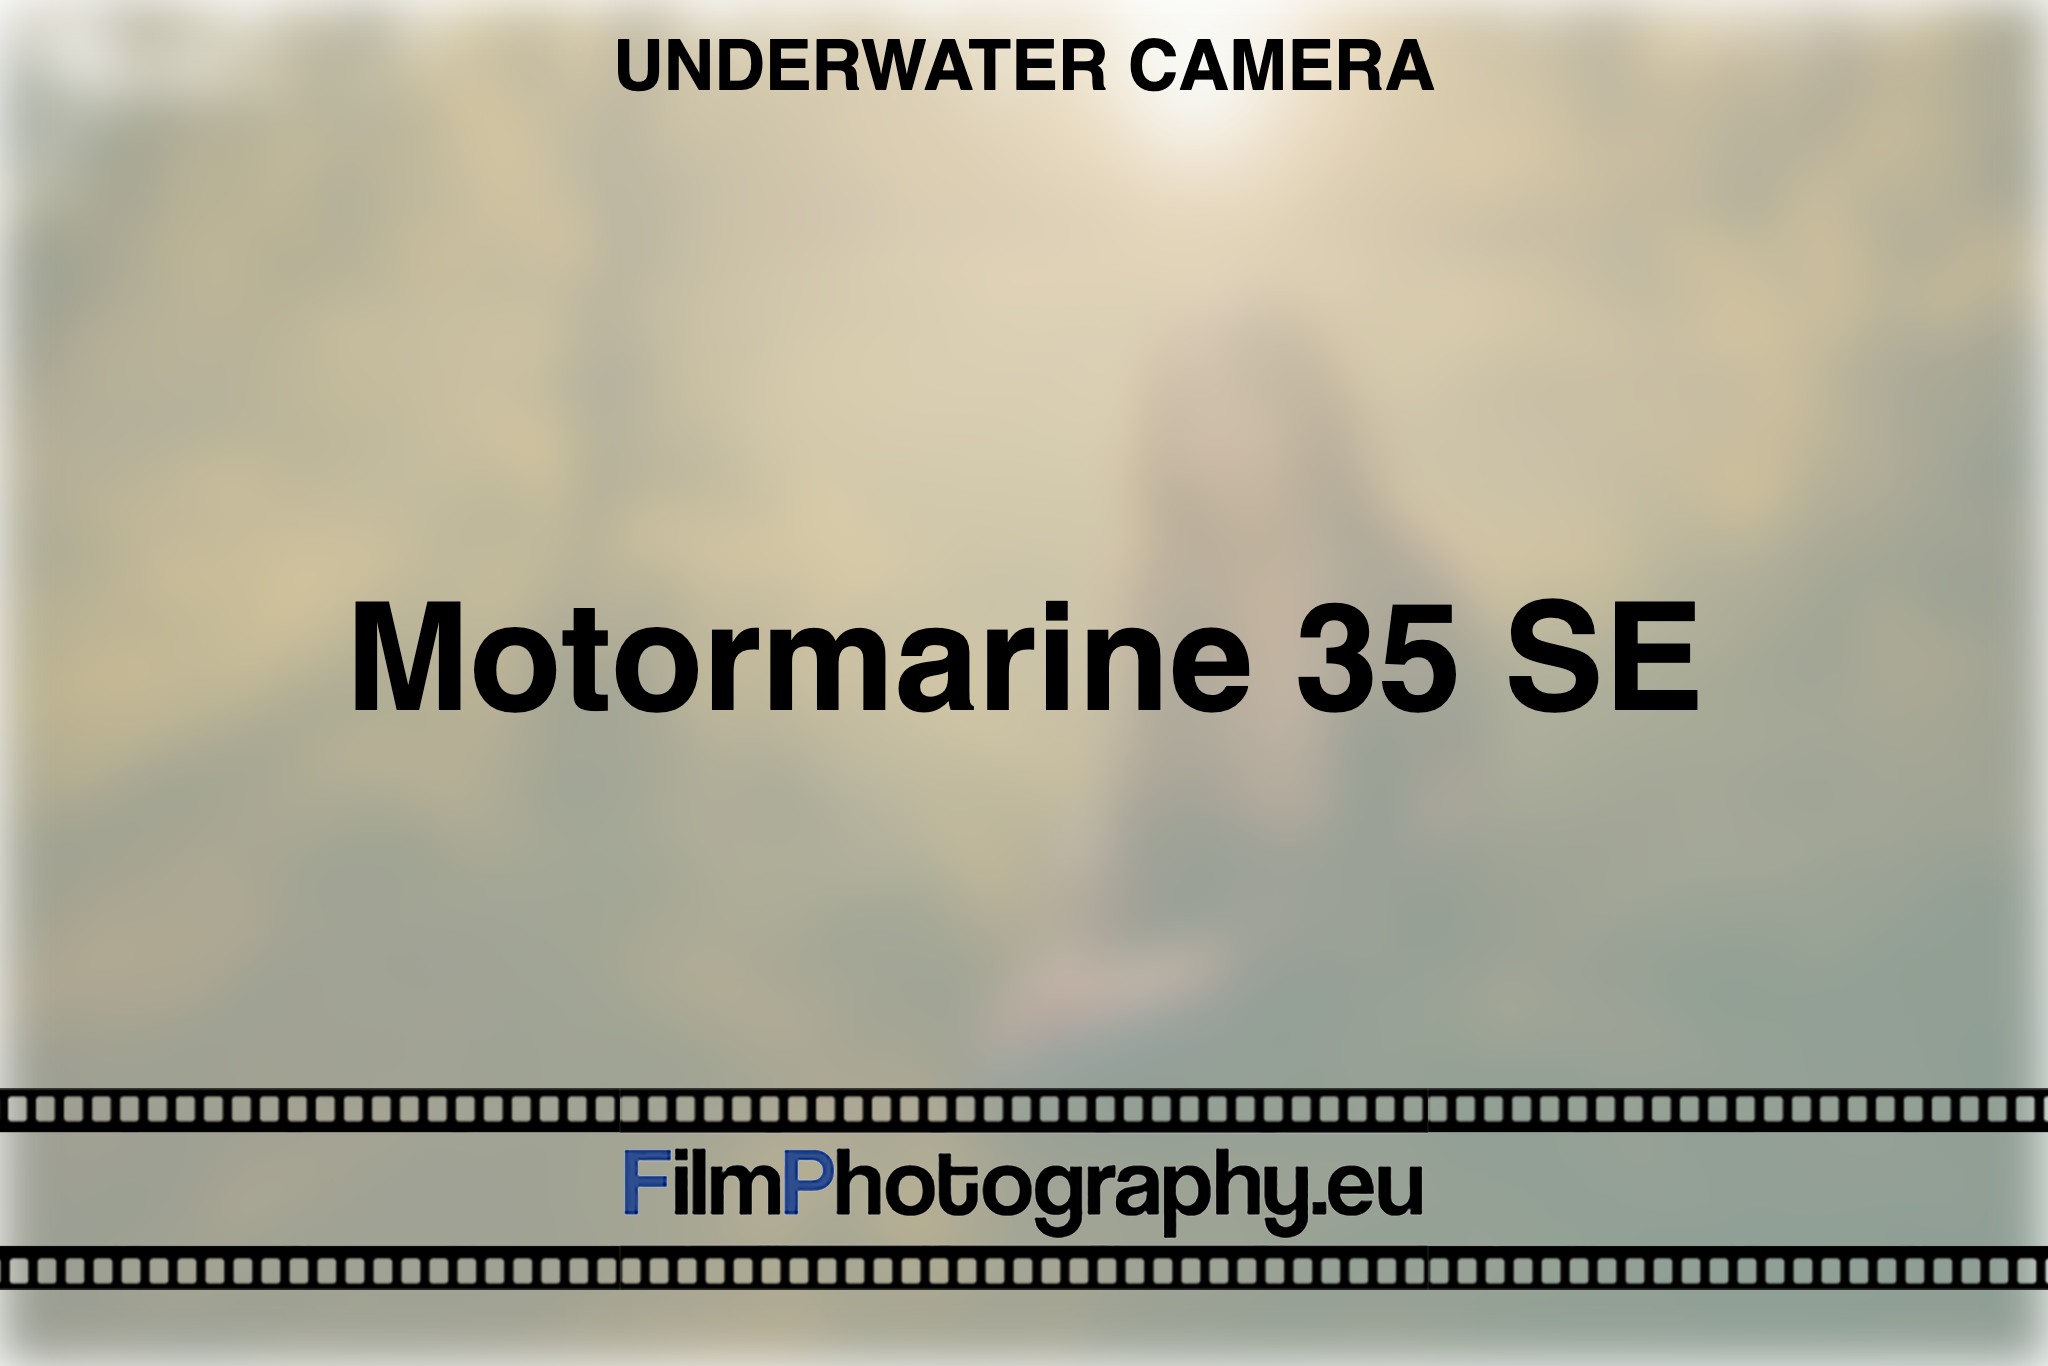 motormarine-35-se-underwater-camera-bnv